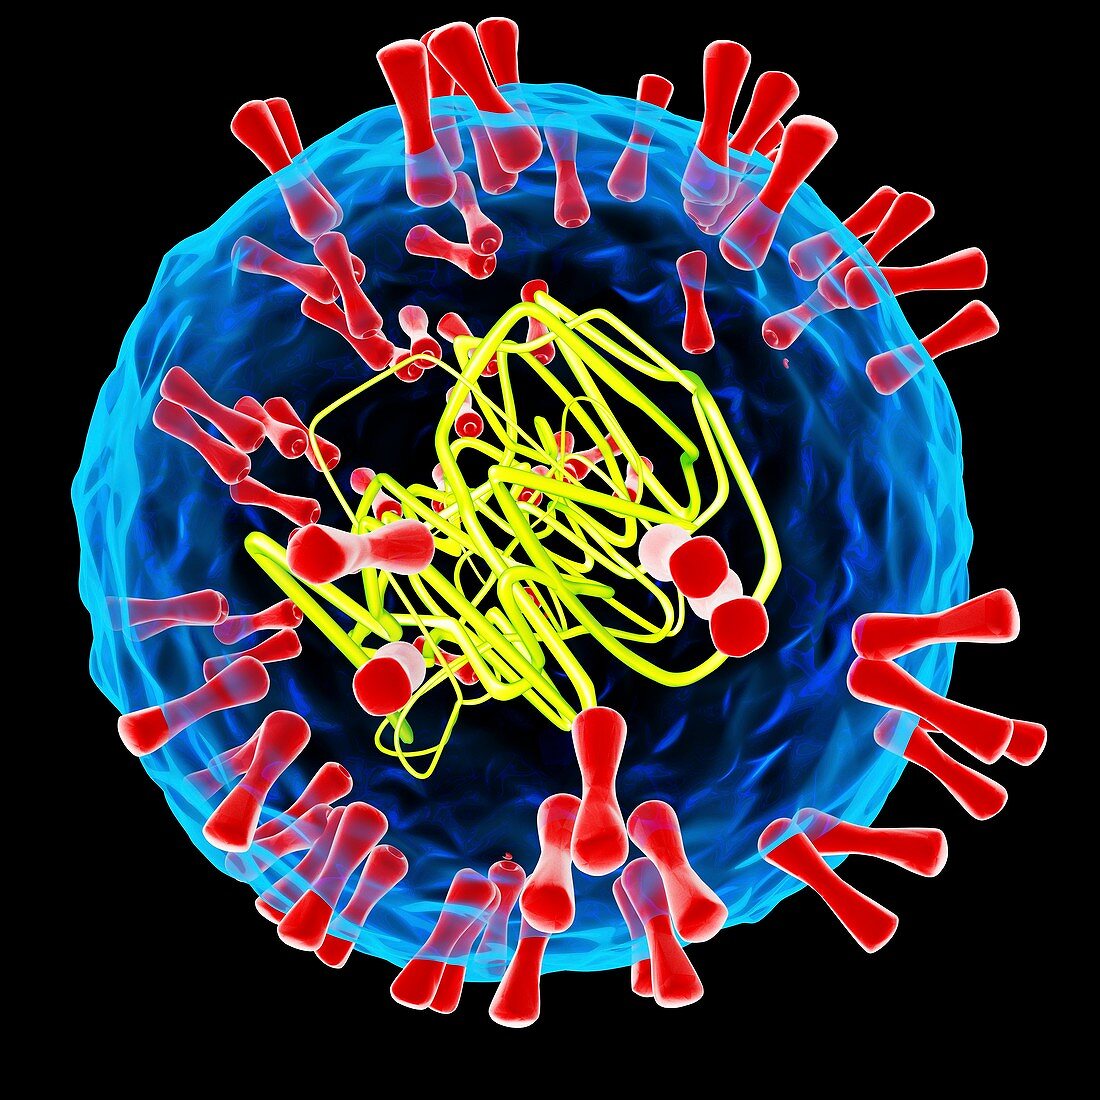 Herpes simplex type 2 virus,illustration